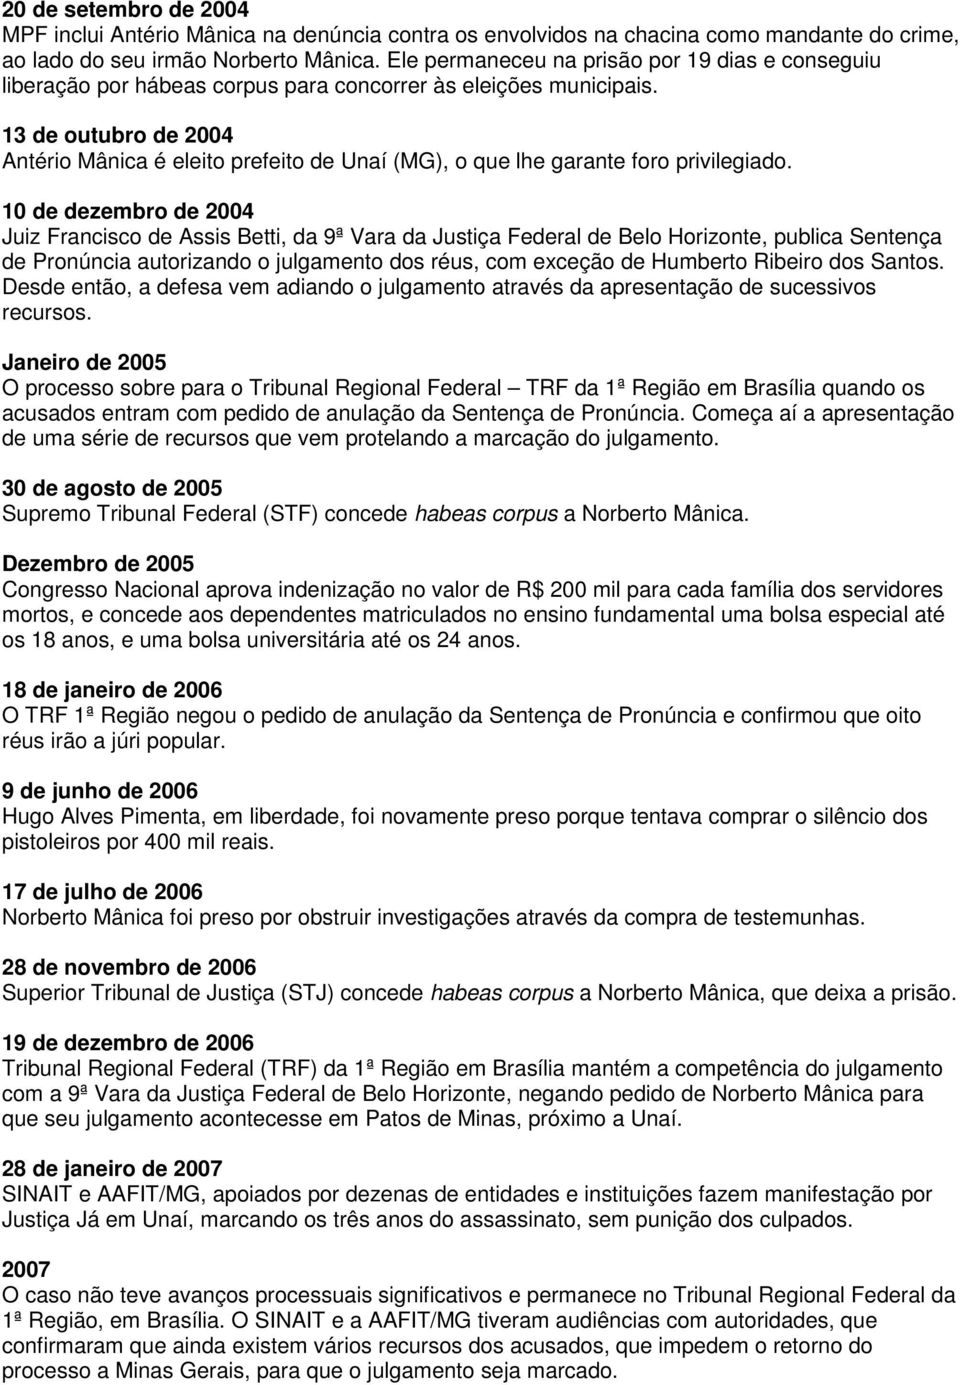 13 de outubro de 2004 Antério Mânica é eleito prefeito de Unaí (MG), o que lhe garante foro privilegiado.